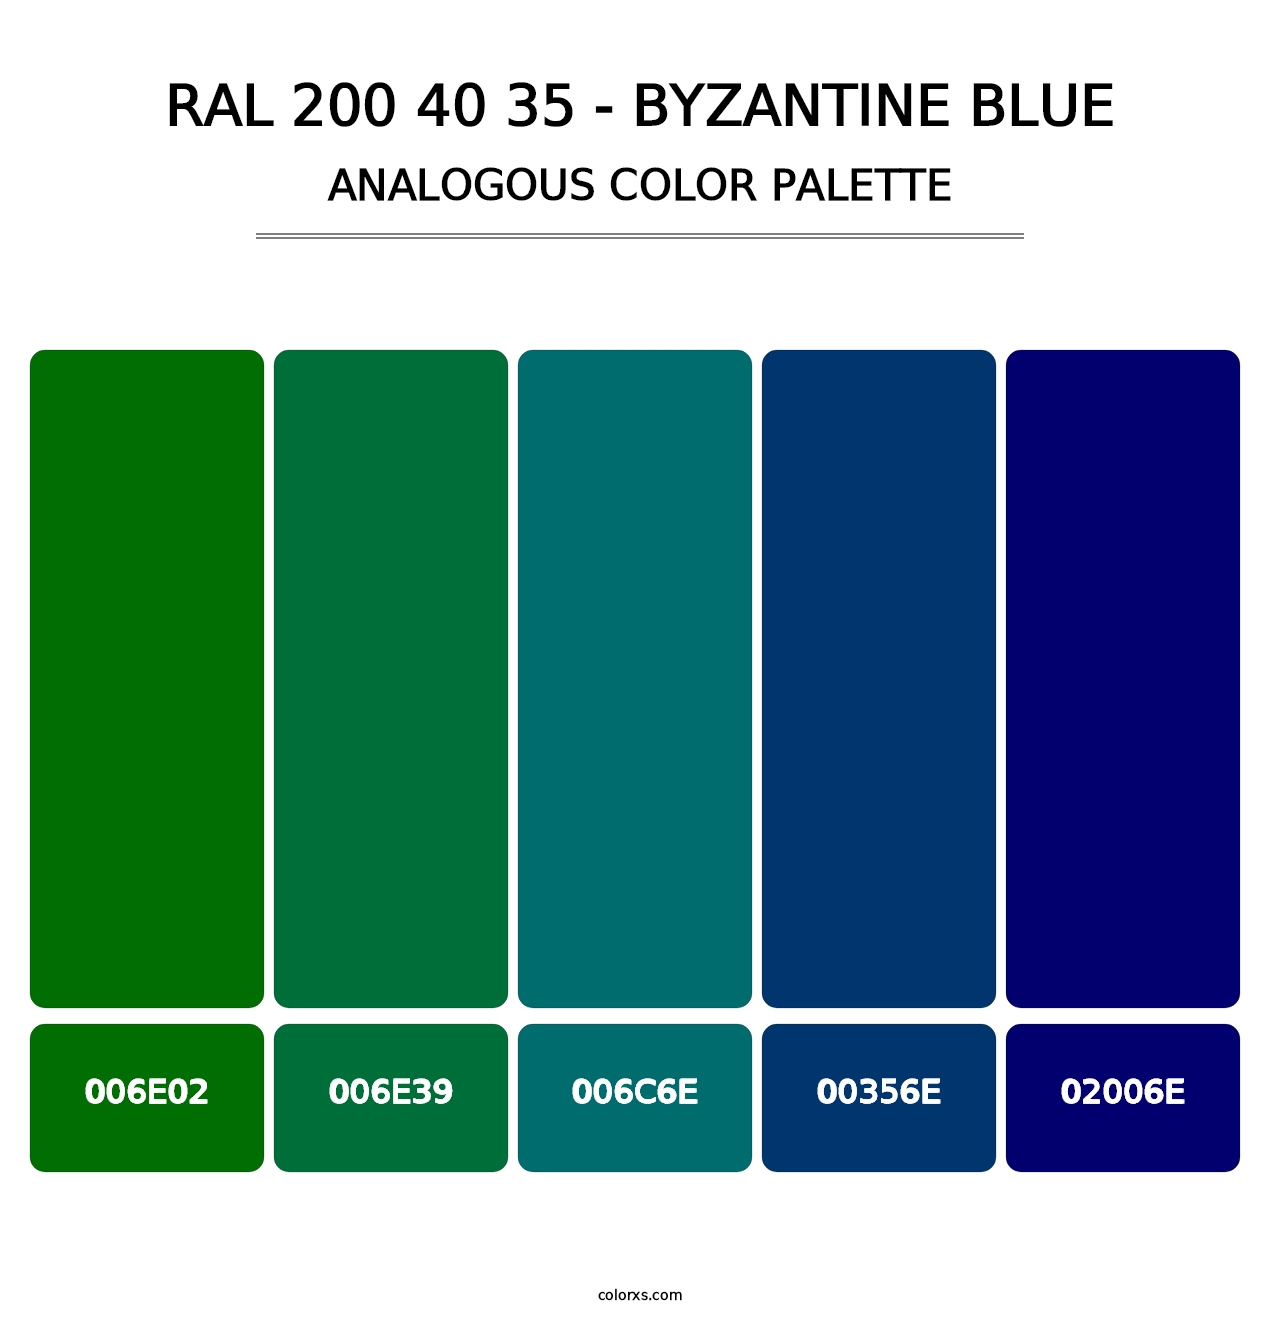 RAL 200 40 35 - Byzantine Blue - Analogous Color Palette